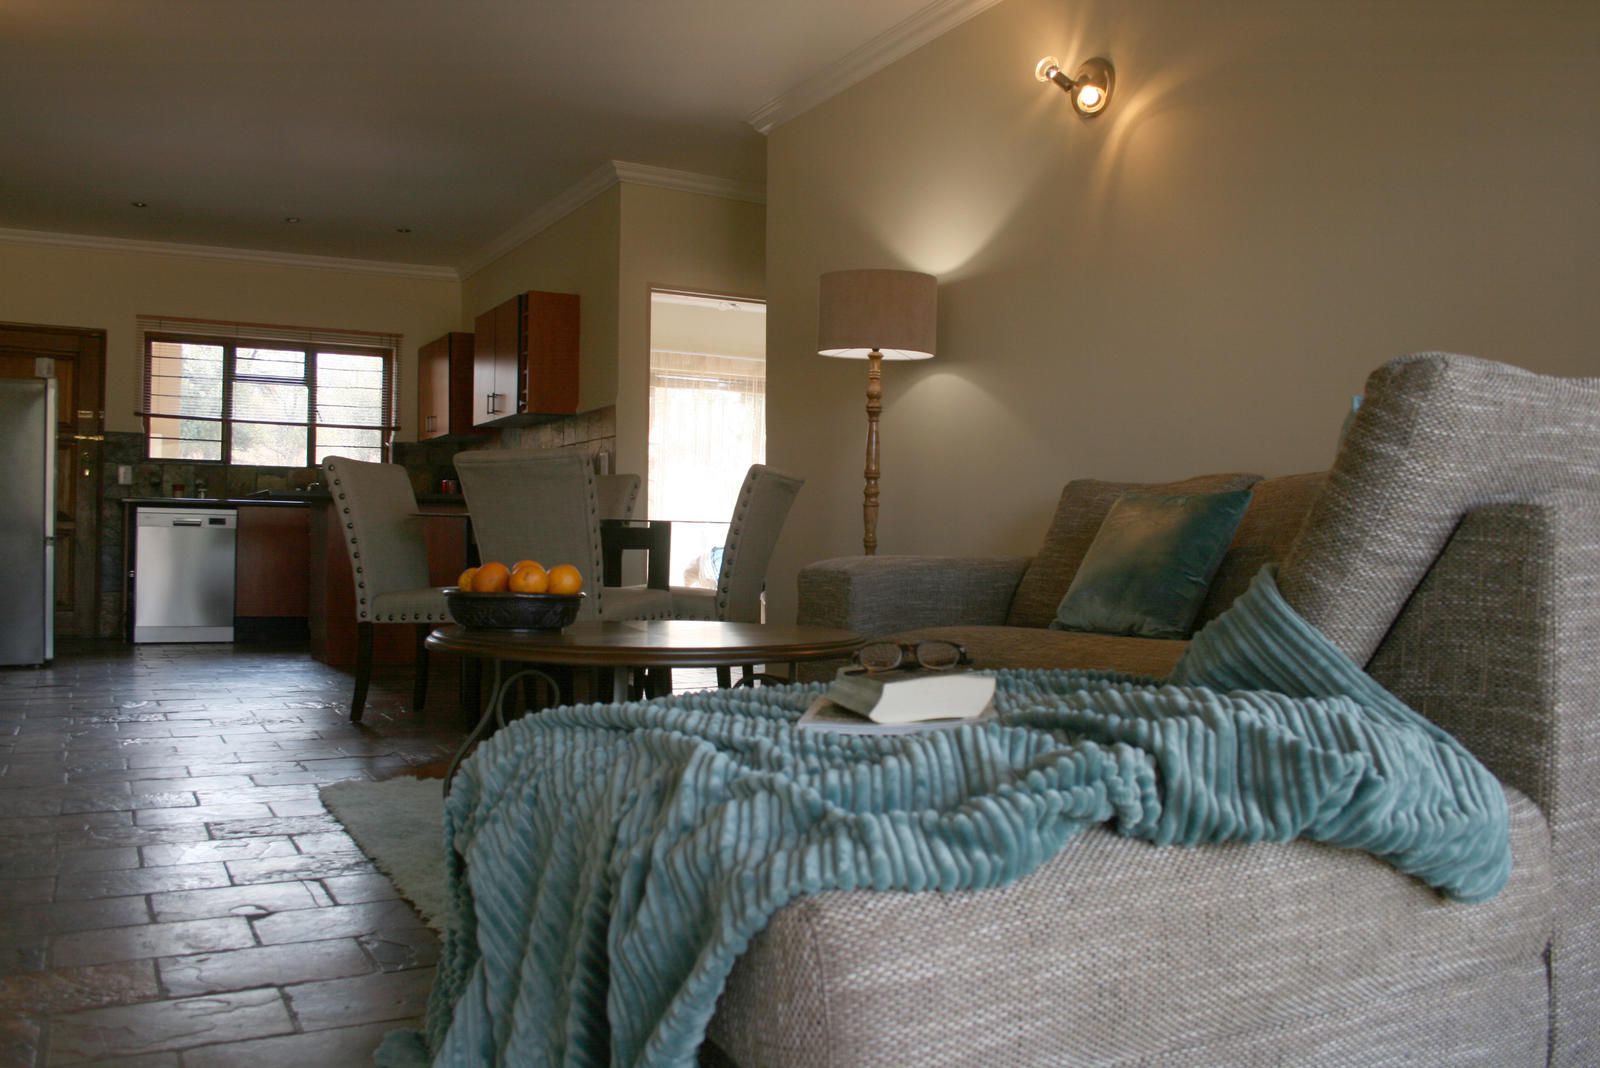 Shakala Village Modimolle Nylstroom Limpopo Province South Africa Living Room